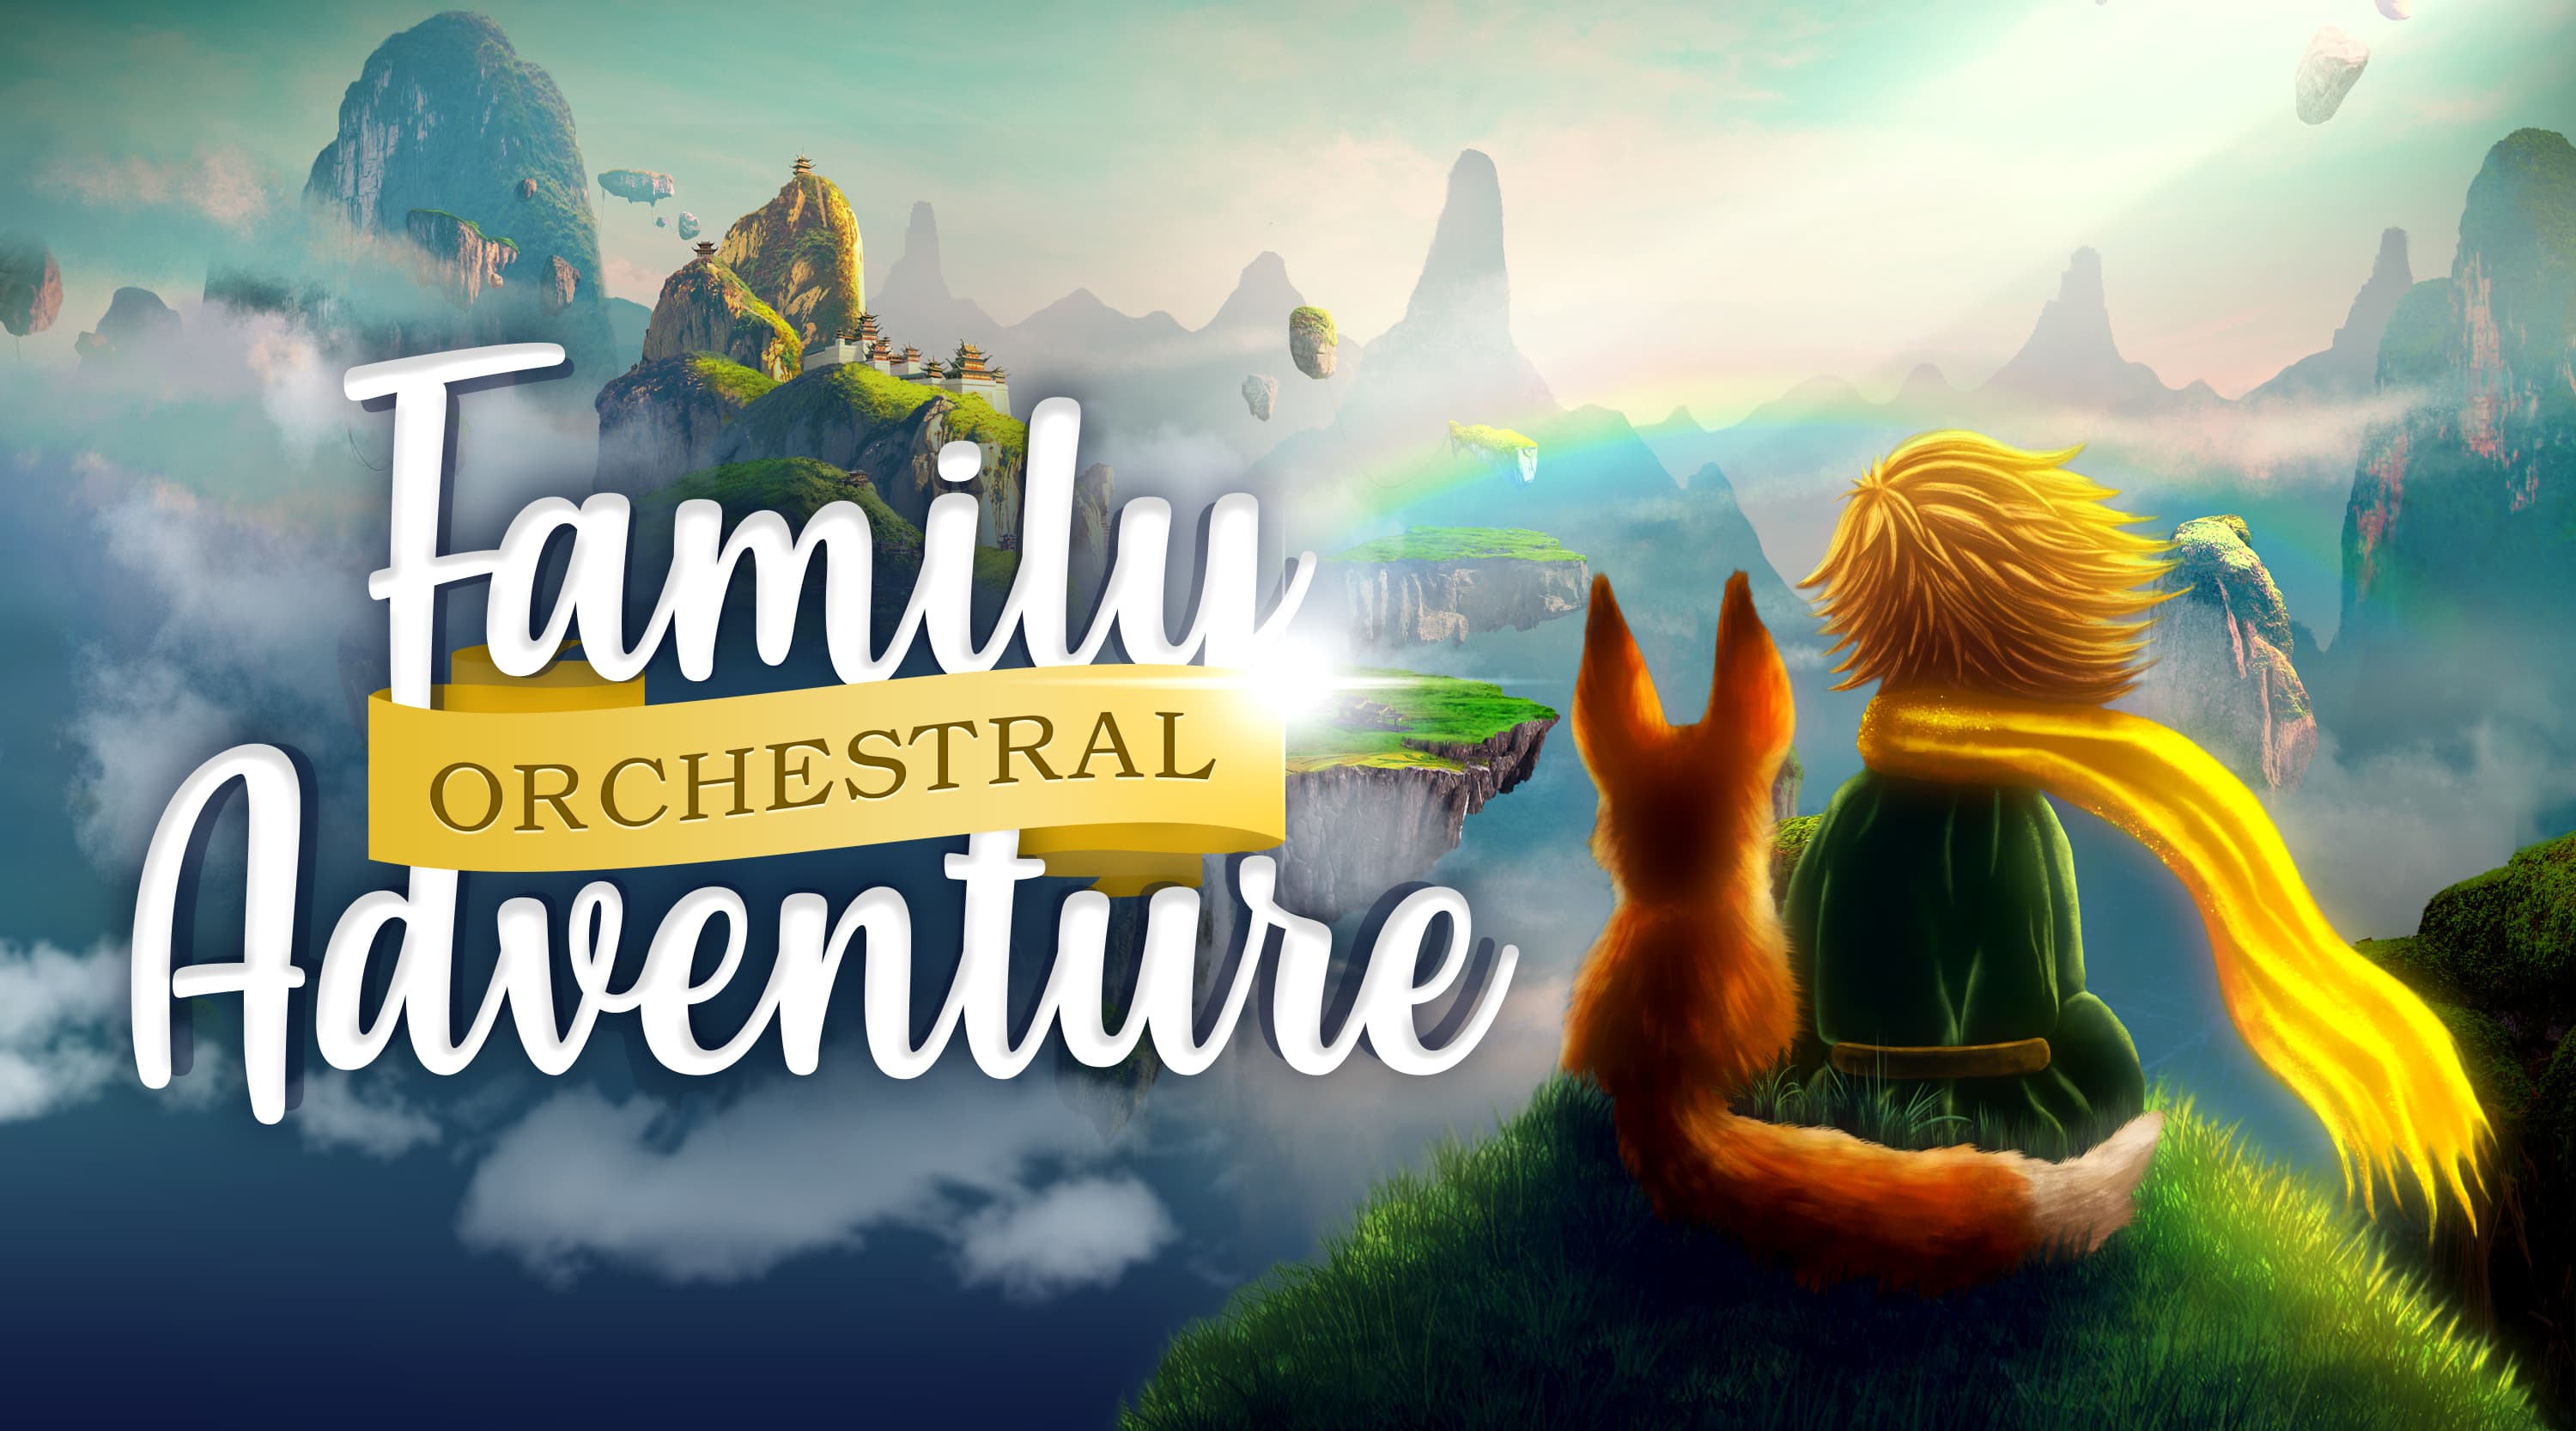 Trailer Special: Family Adventure